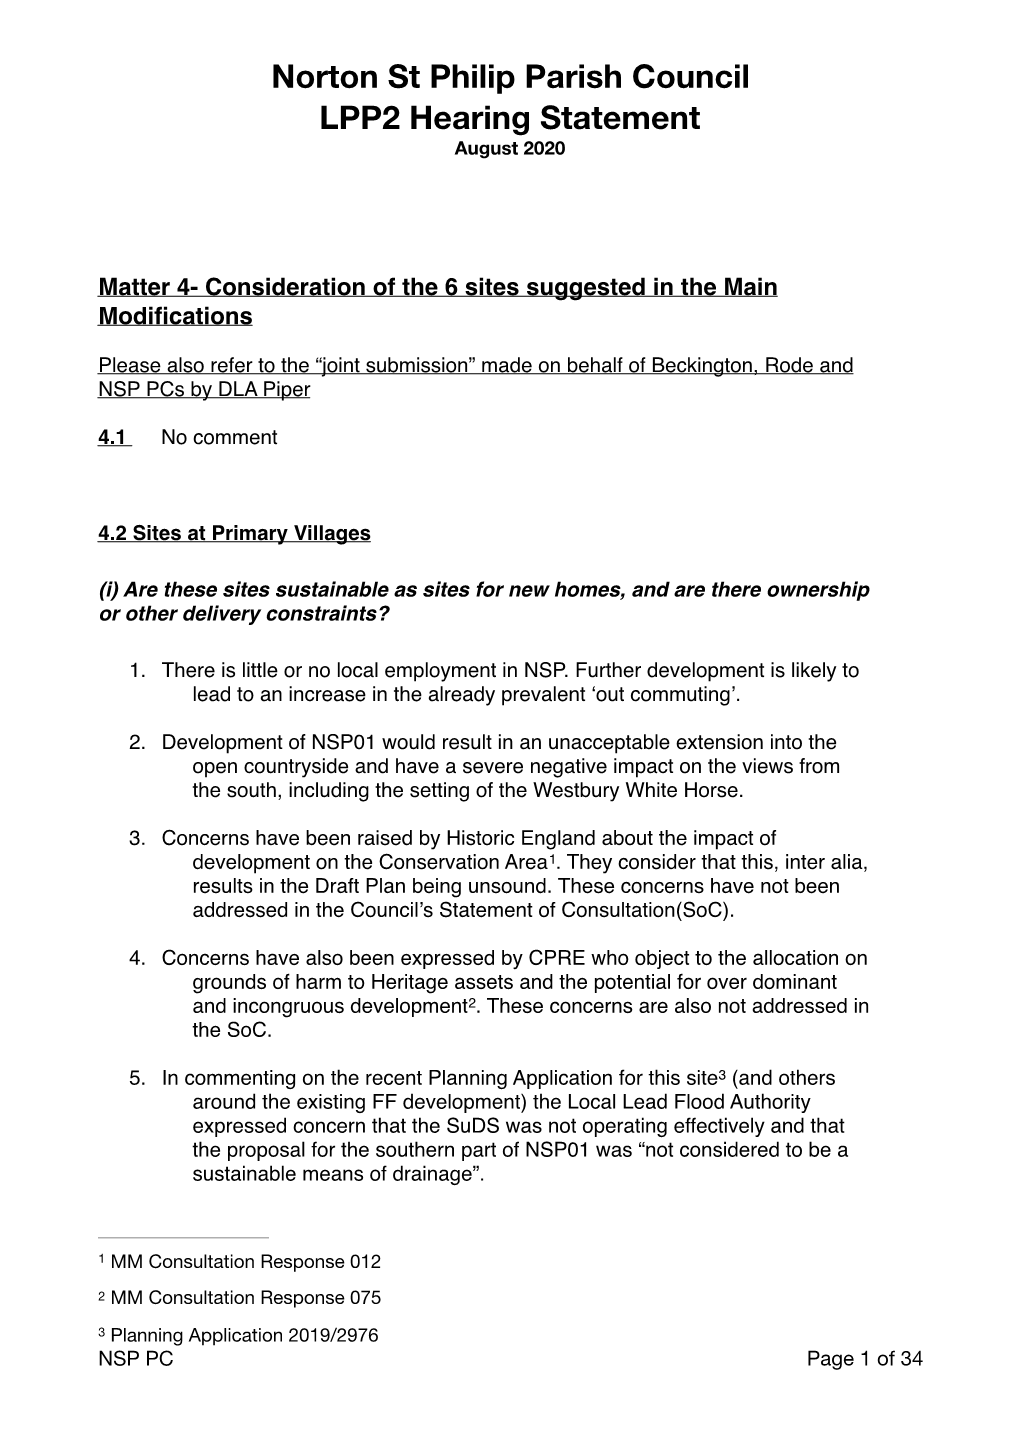 Norton St Philip Parish Council LPP2 Hearing Statement August 2020